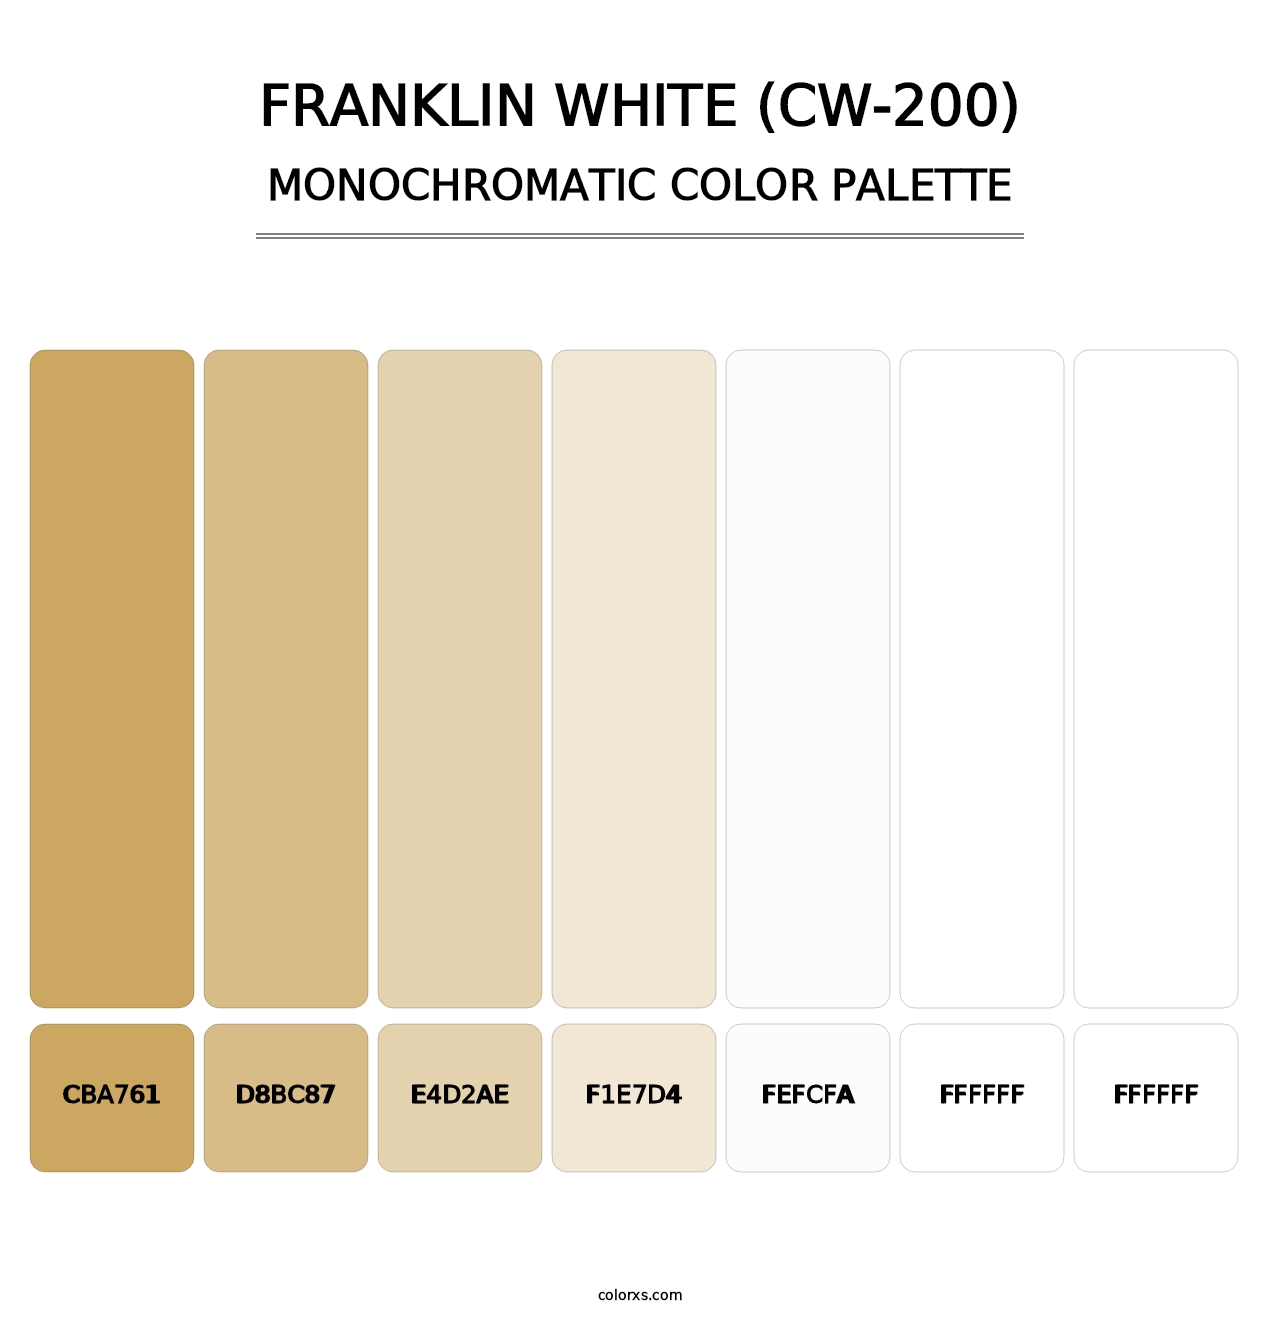 Franklin White (CW-200) - Monochromatic Color Palette